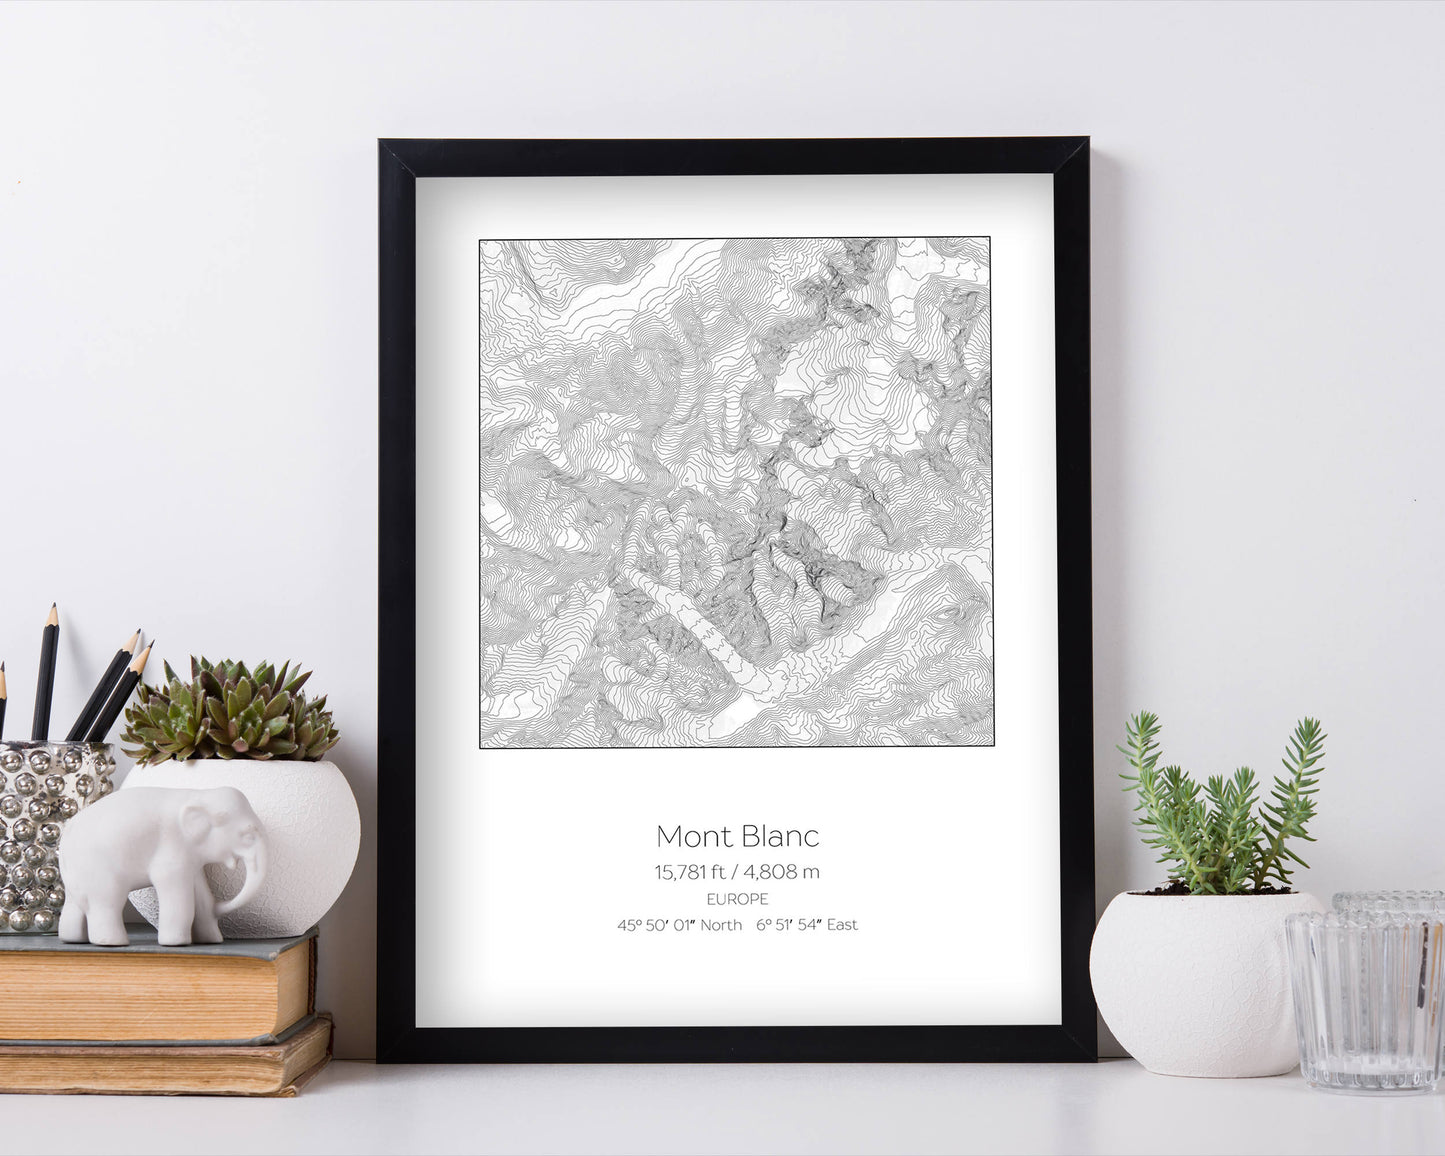 7 Summits, Messner / Western Europe Variation - 7 Prints - Topography Elevation Print Wall Art